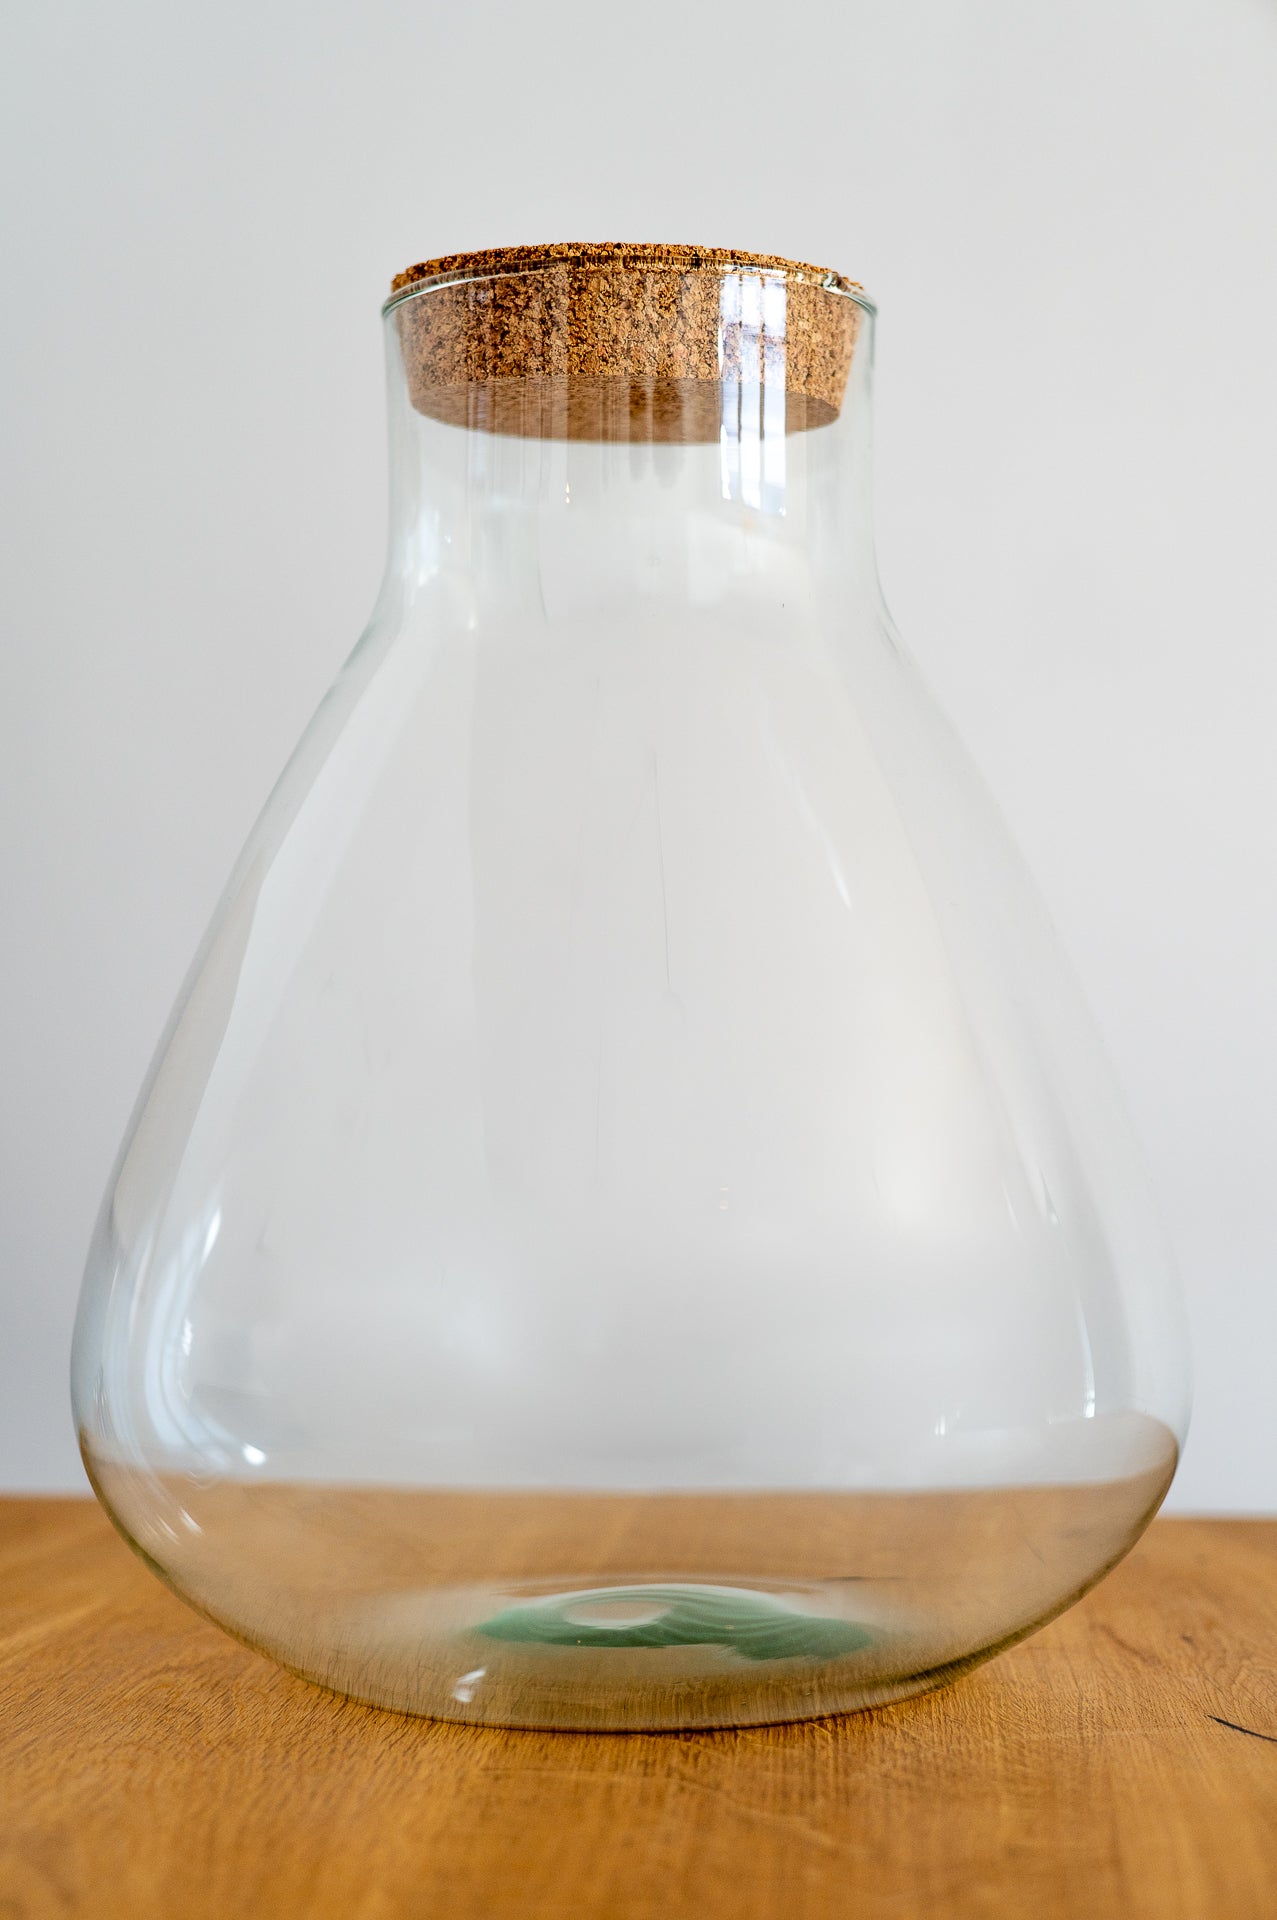 Flaschengarten Glas "Erlenmeyer" ↑35cm zum selbst befüllen